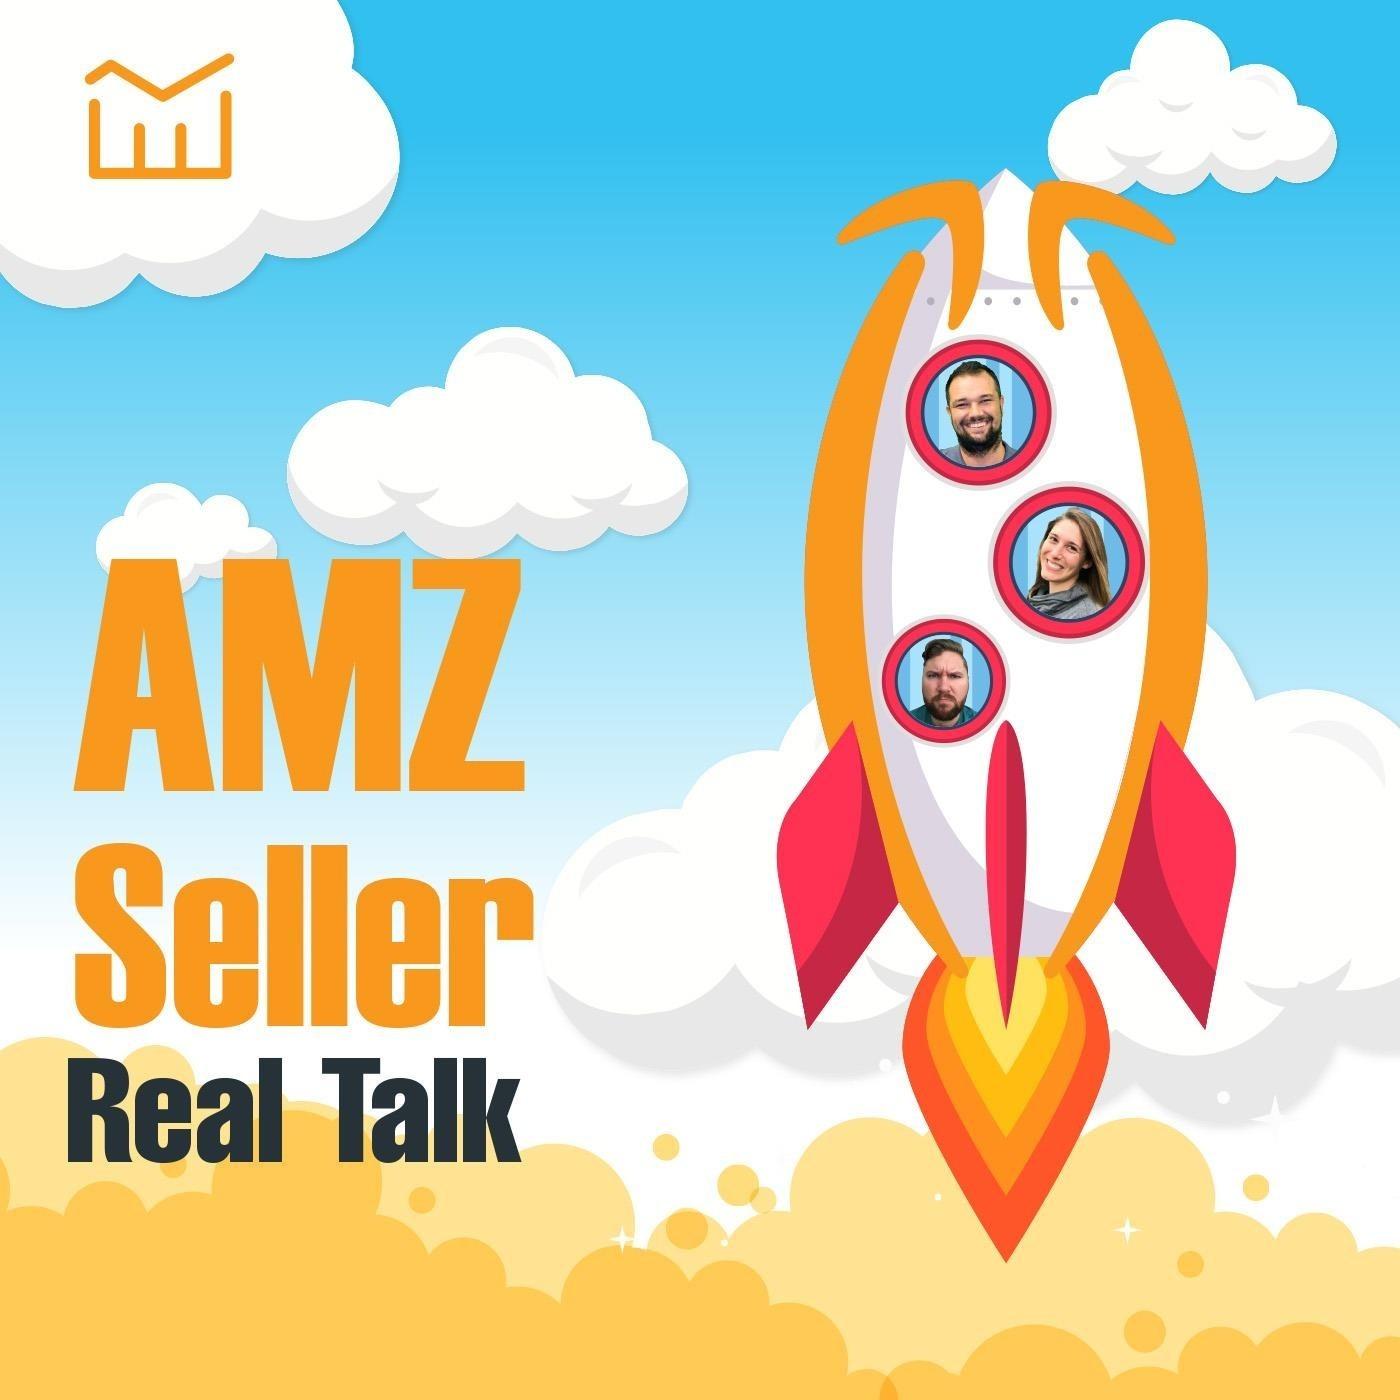 AMZ Seller Real Talk